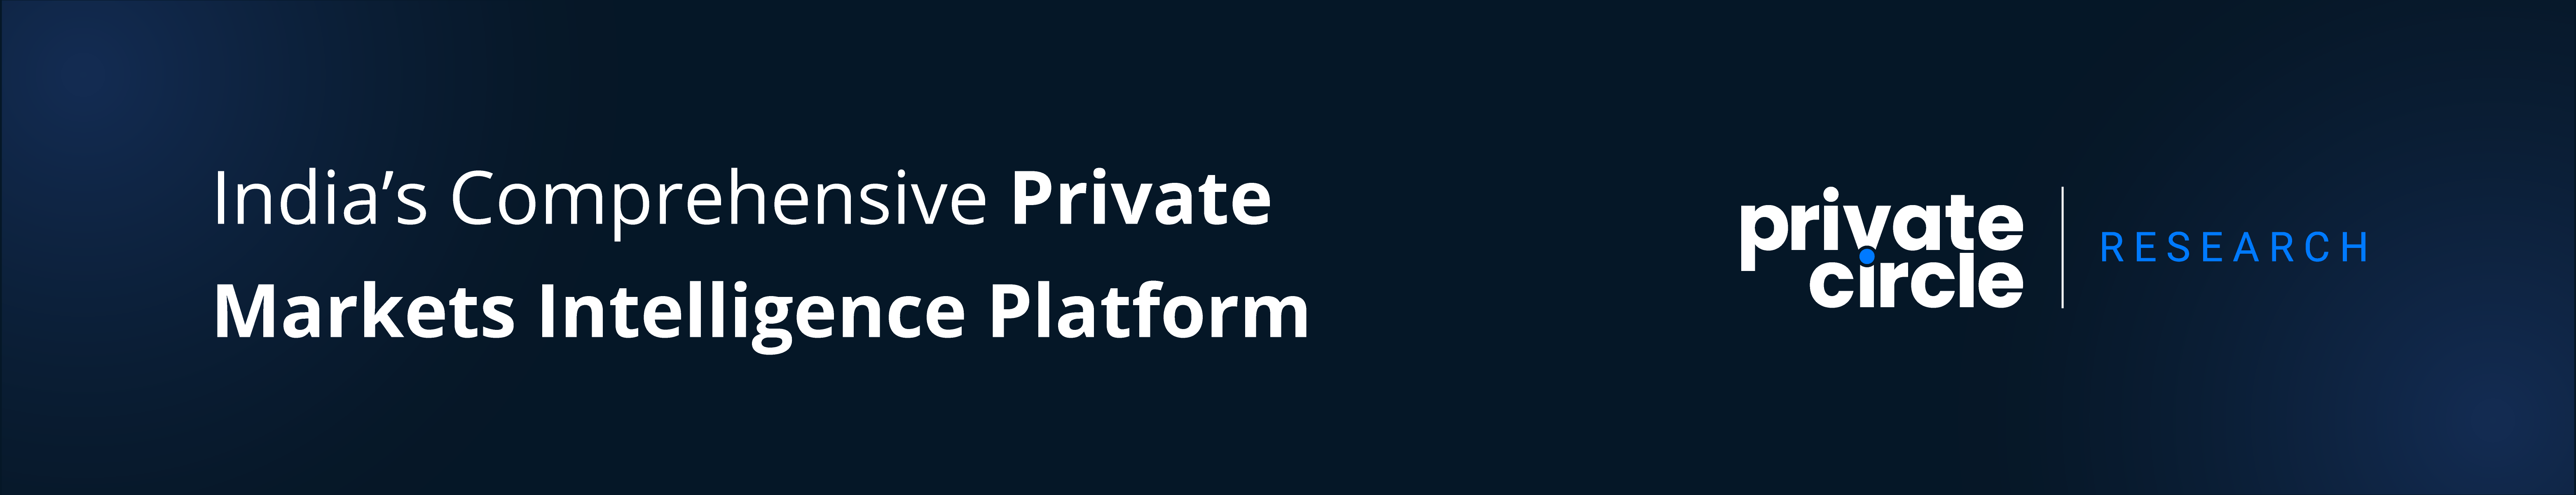 PrivateCircle - India's Comprehensive Private Markets Intelligence Platform.